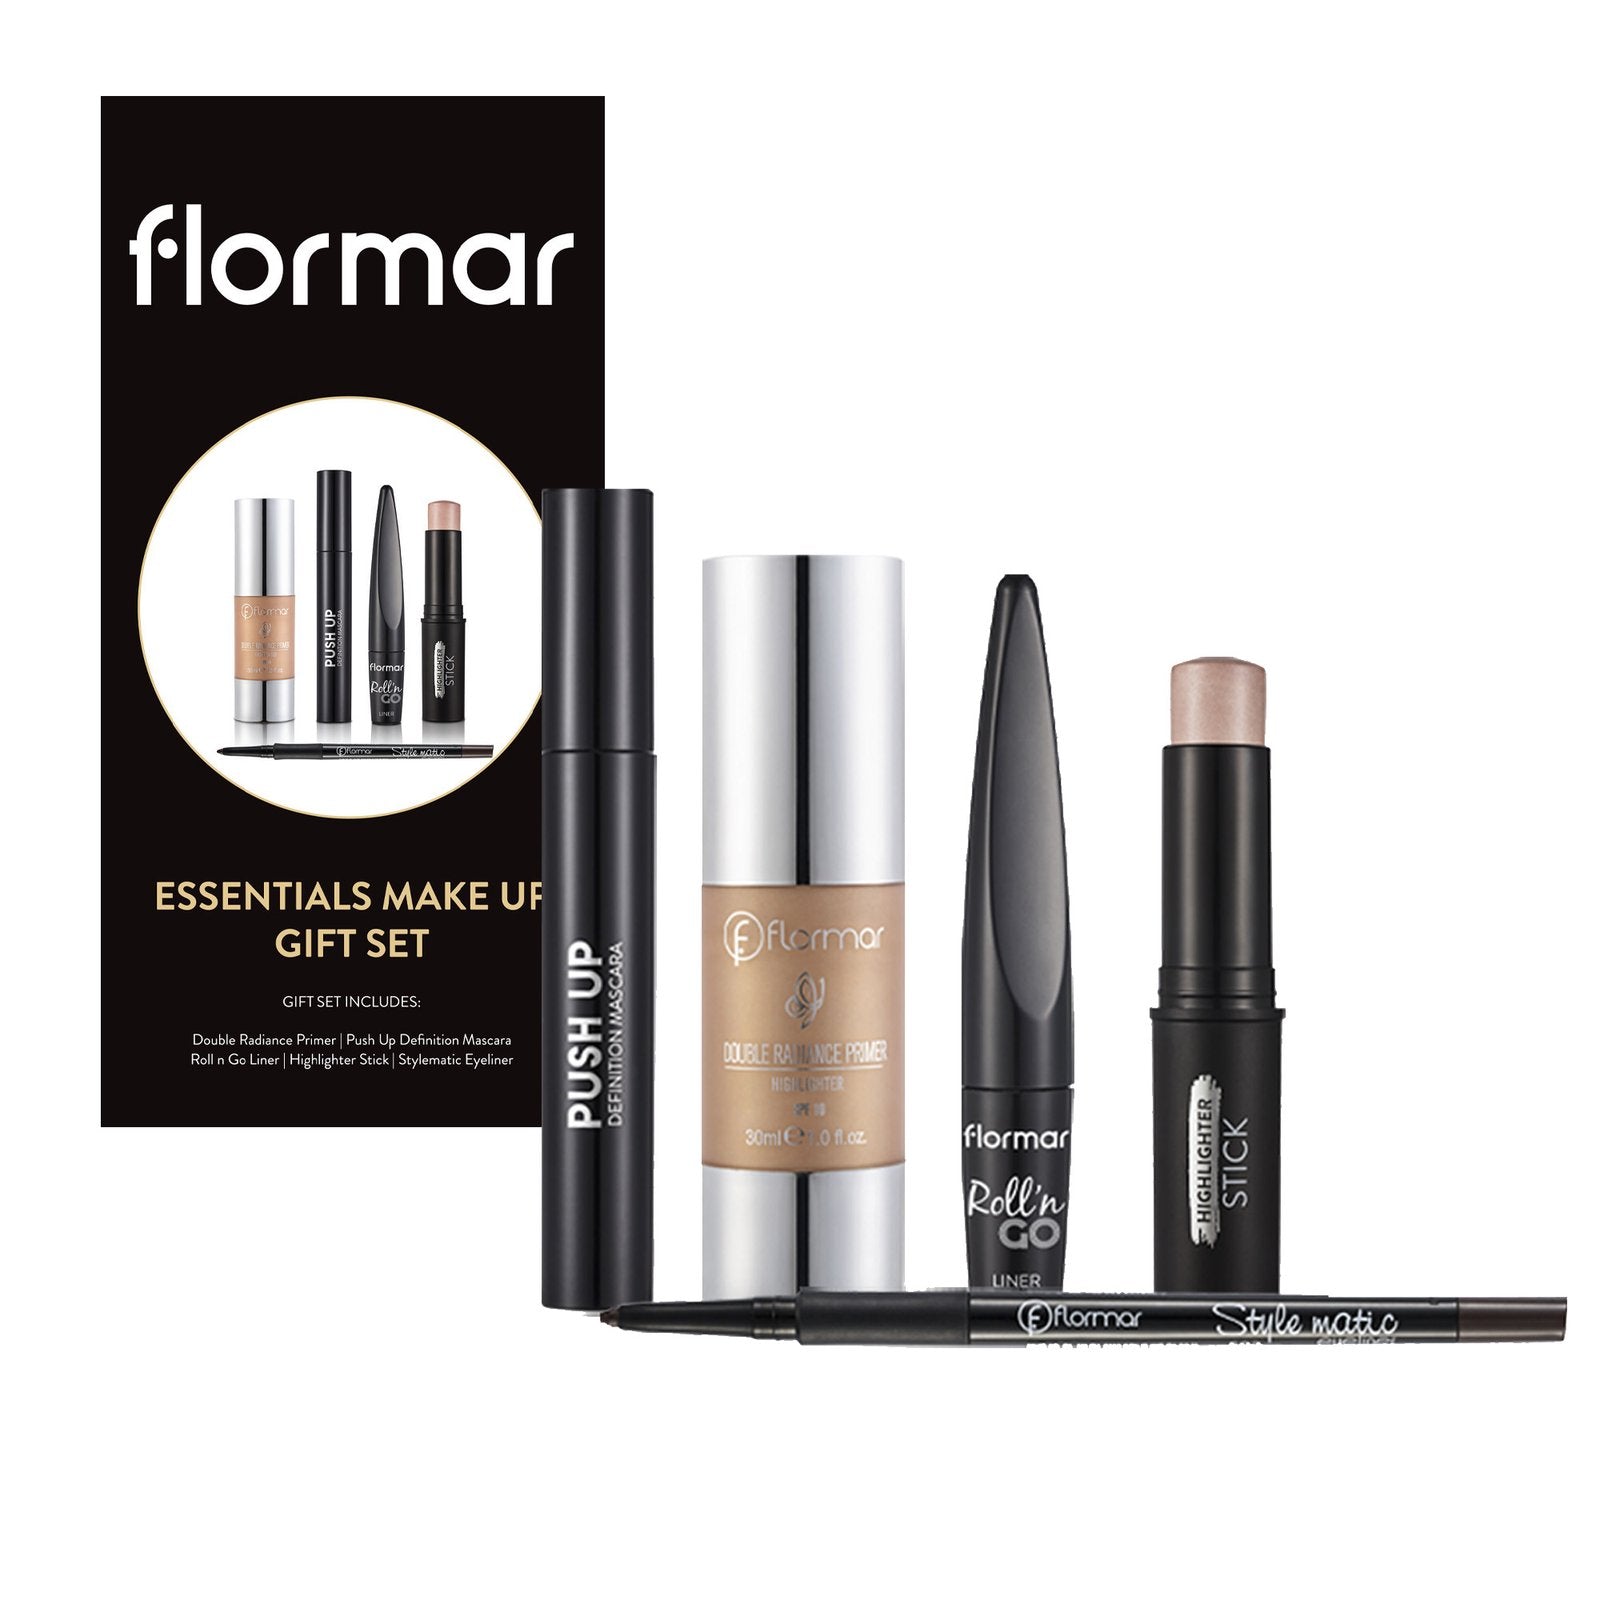 Flormar Essentials Make Up Gift Set